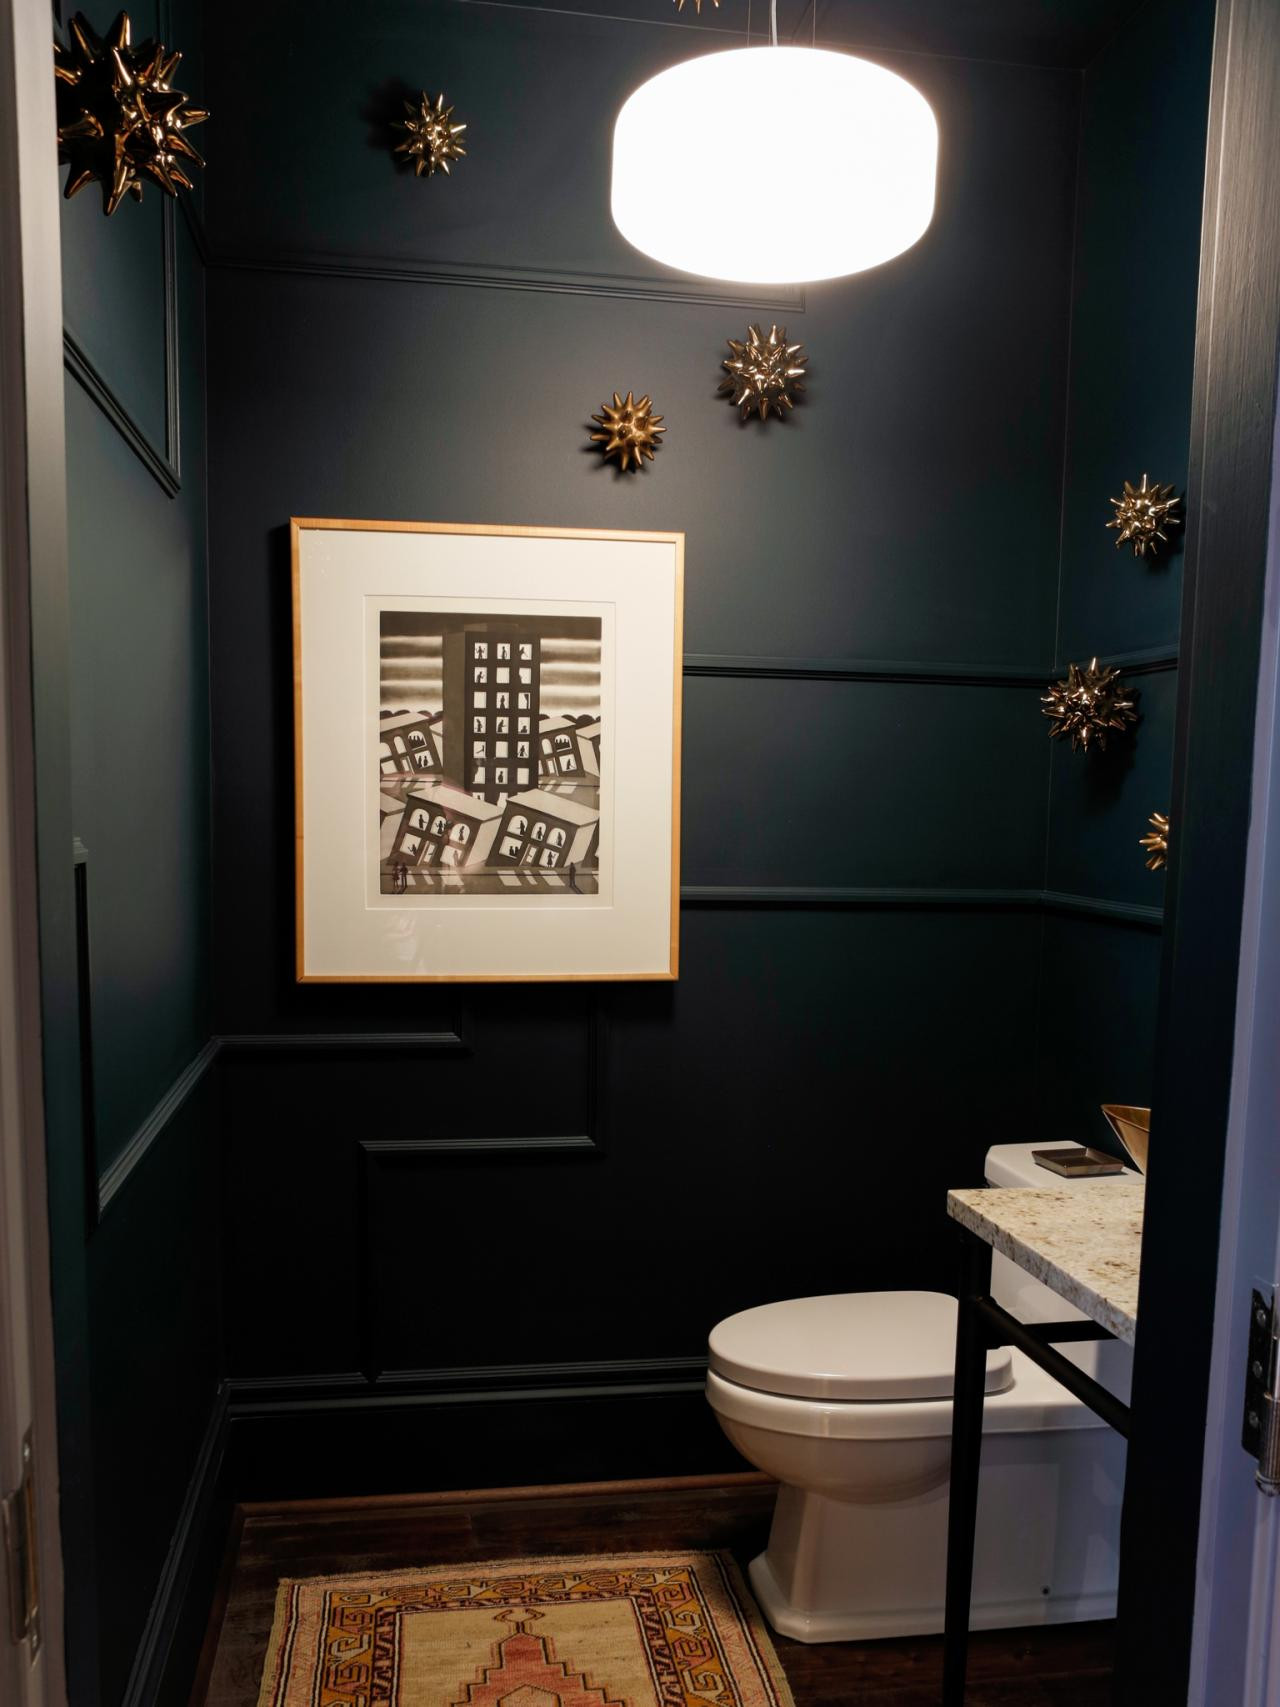 Images Of Bathroom Decor
 20 Bathroom Decorating Ideas mashoid